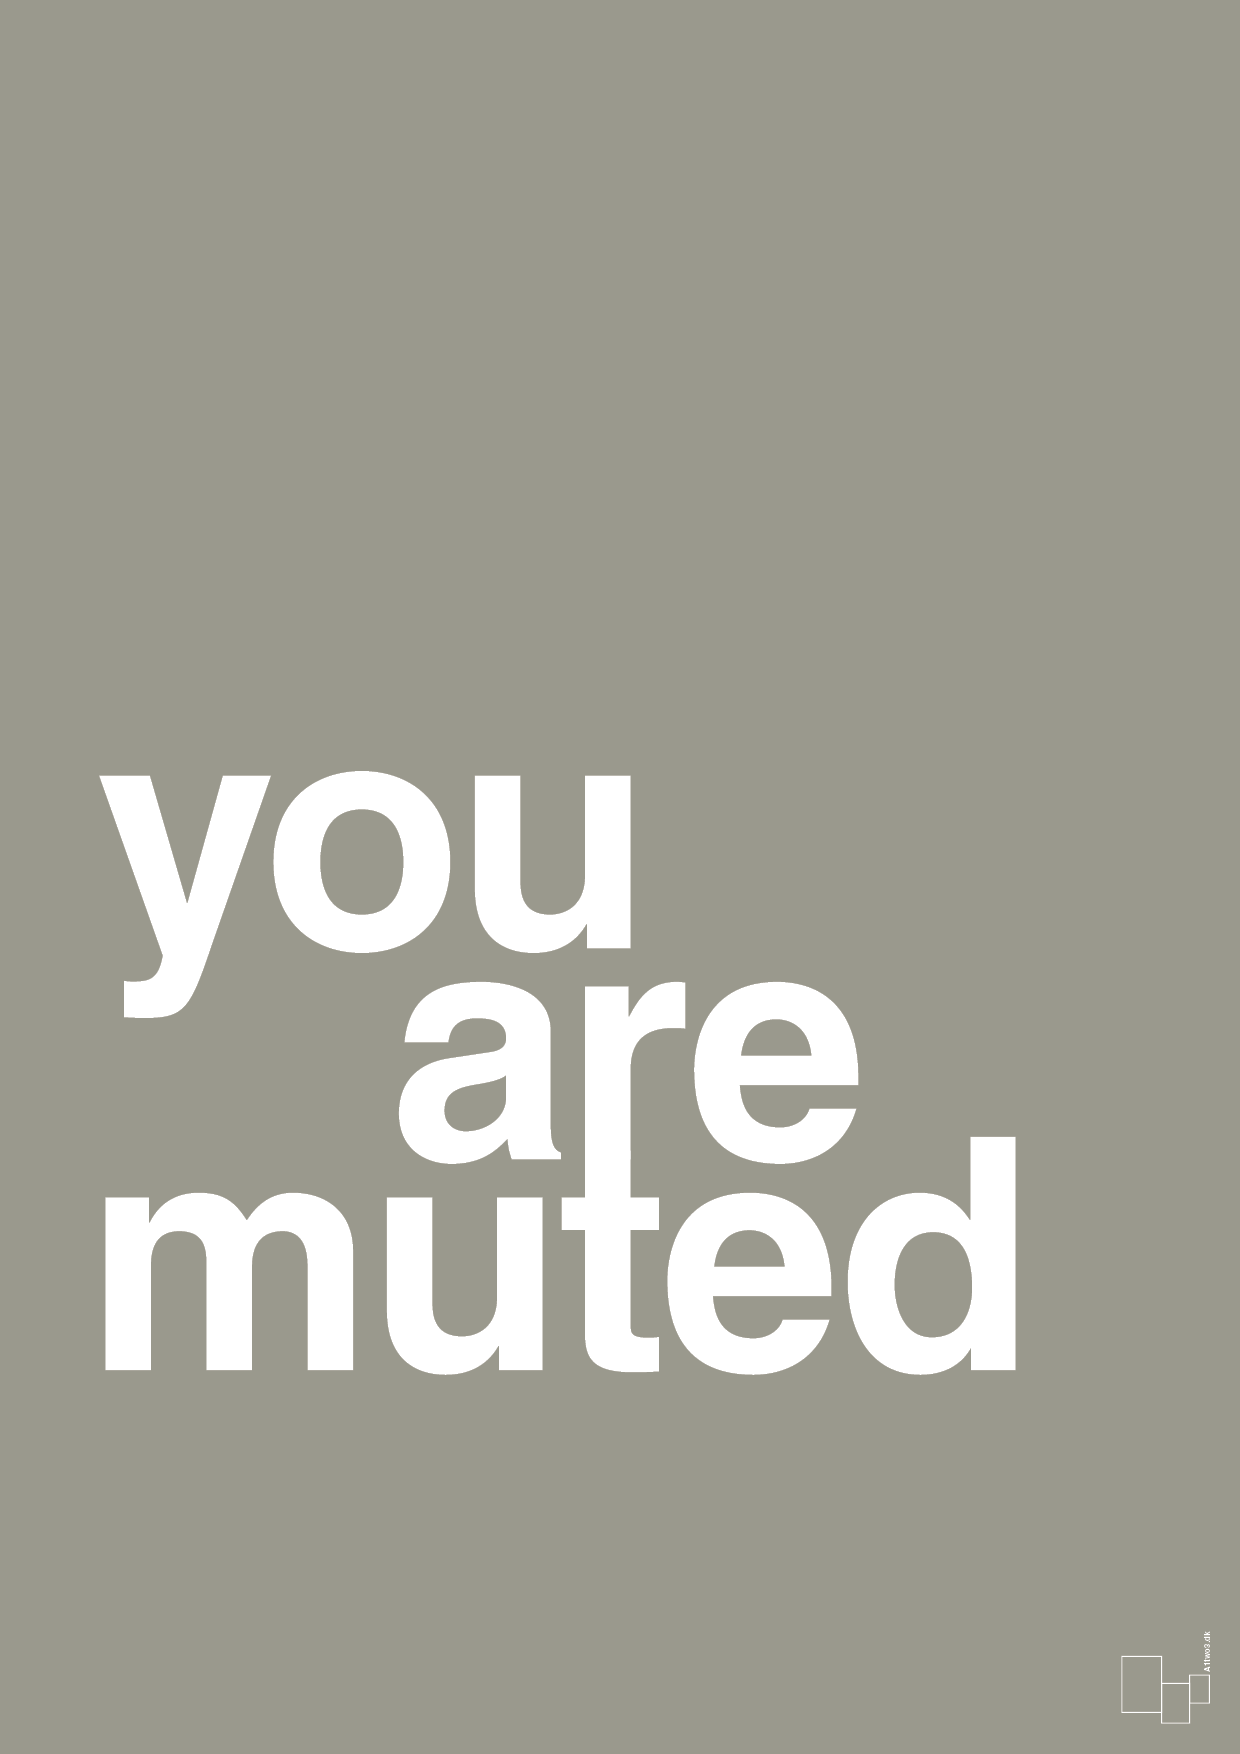 you are muted - Plakat med Ordsprog i Battleship Gray